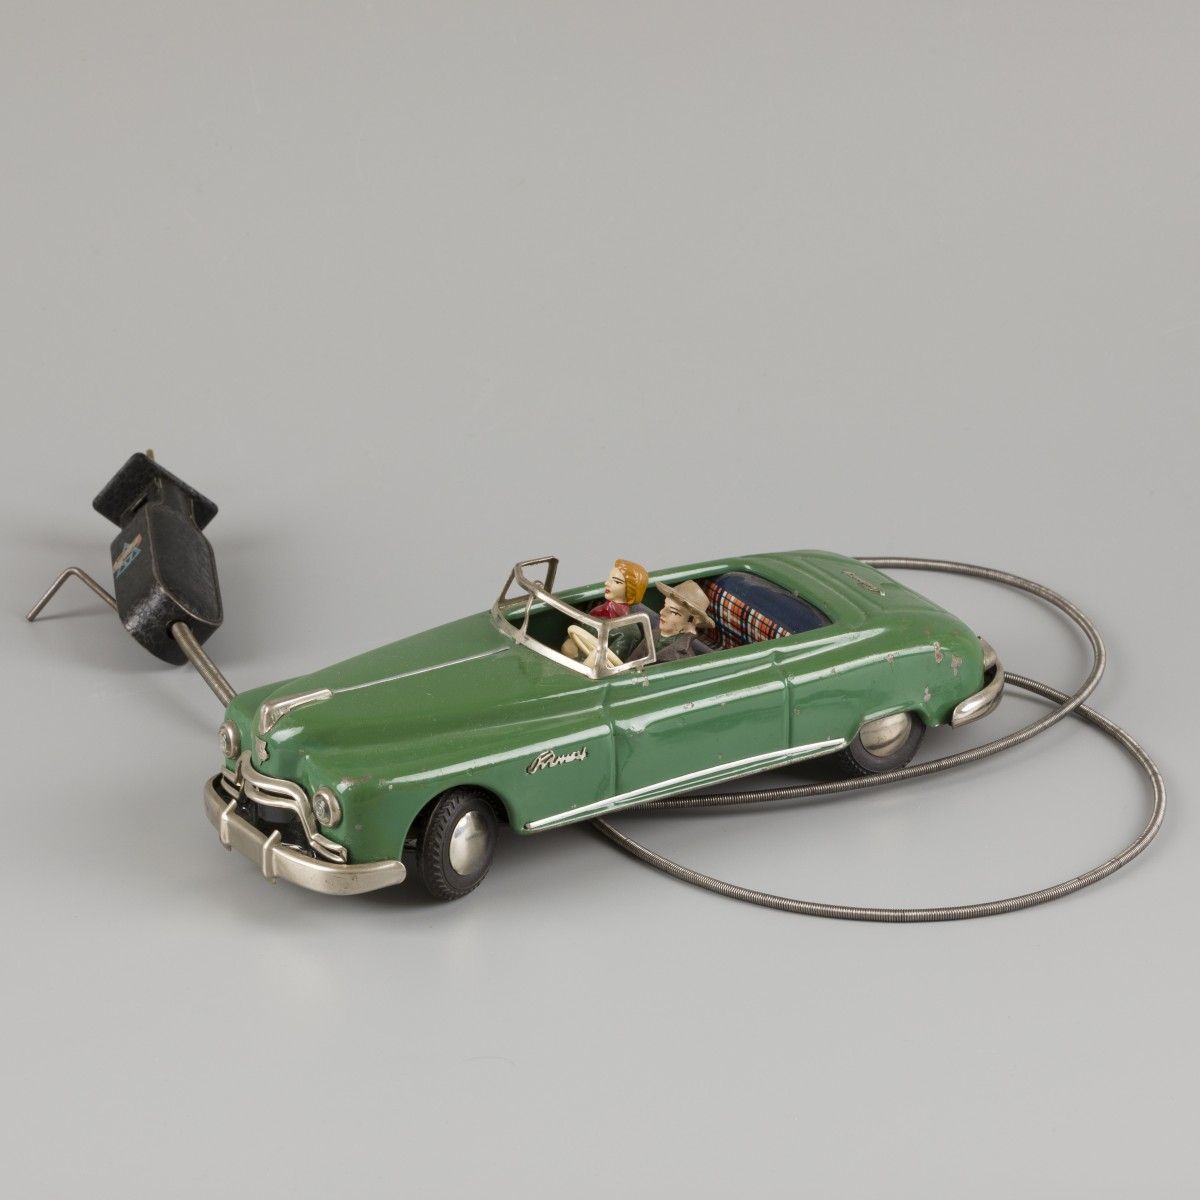 Arnold cable remote control tin toy car 完整的两个乘客，状态良好。估计：120 - 180欧元。